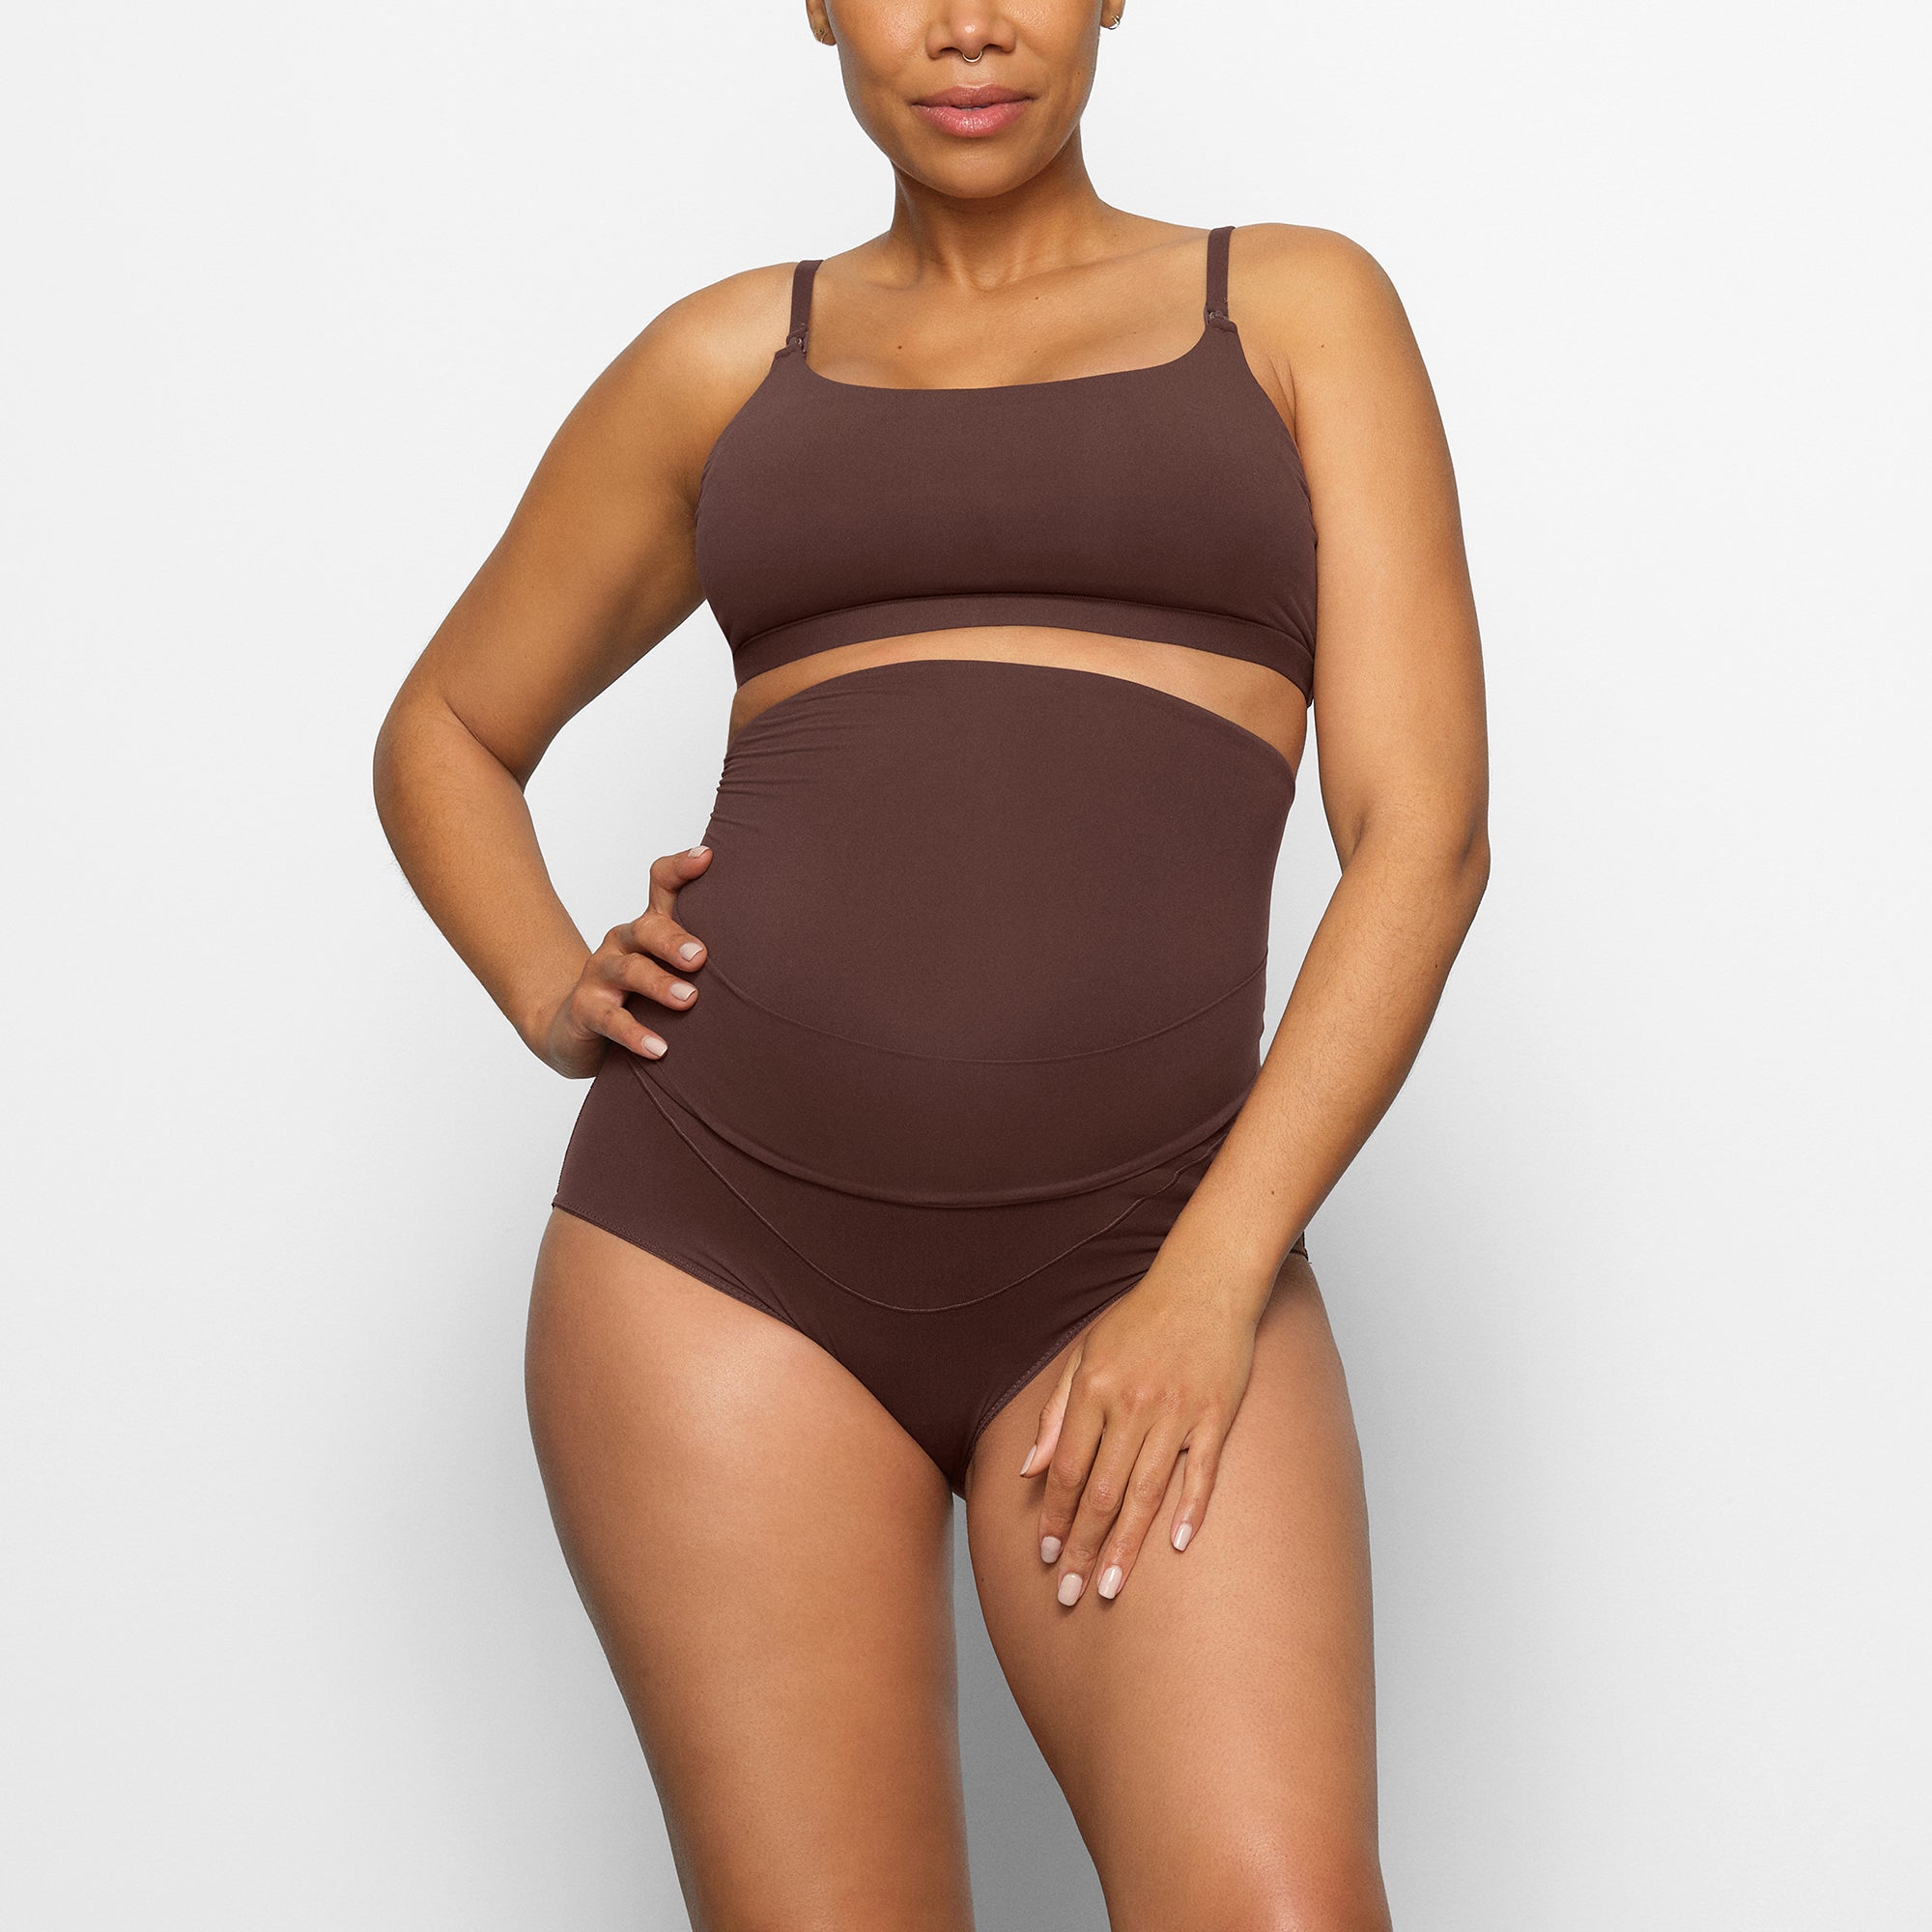 Ultimate Bodyfit Pregnancy and Breastfeeding Bra SweetCare Puerto Rico